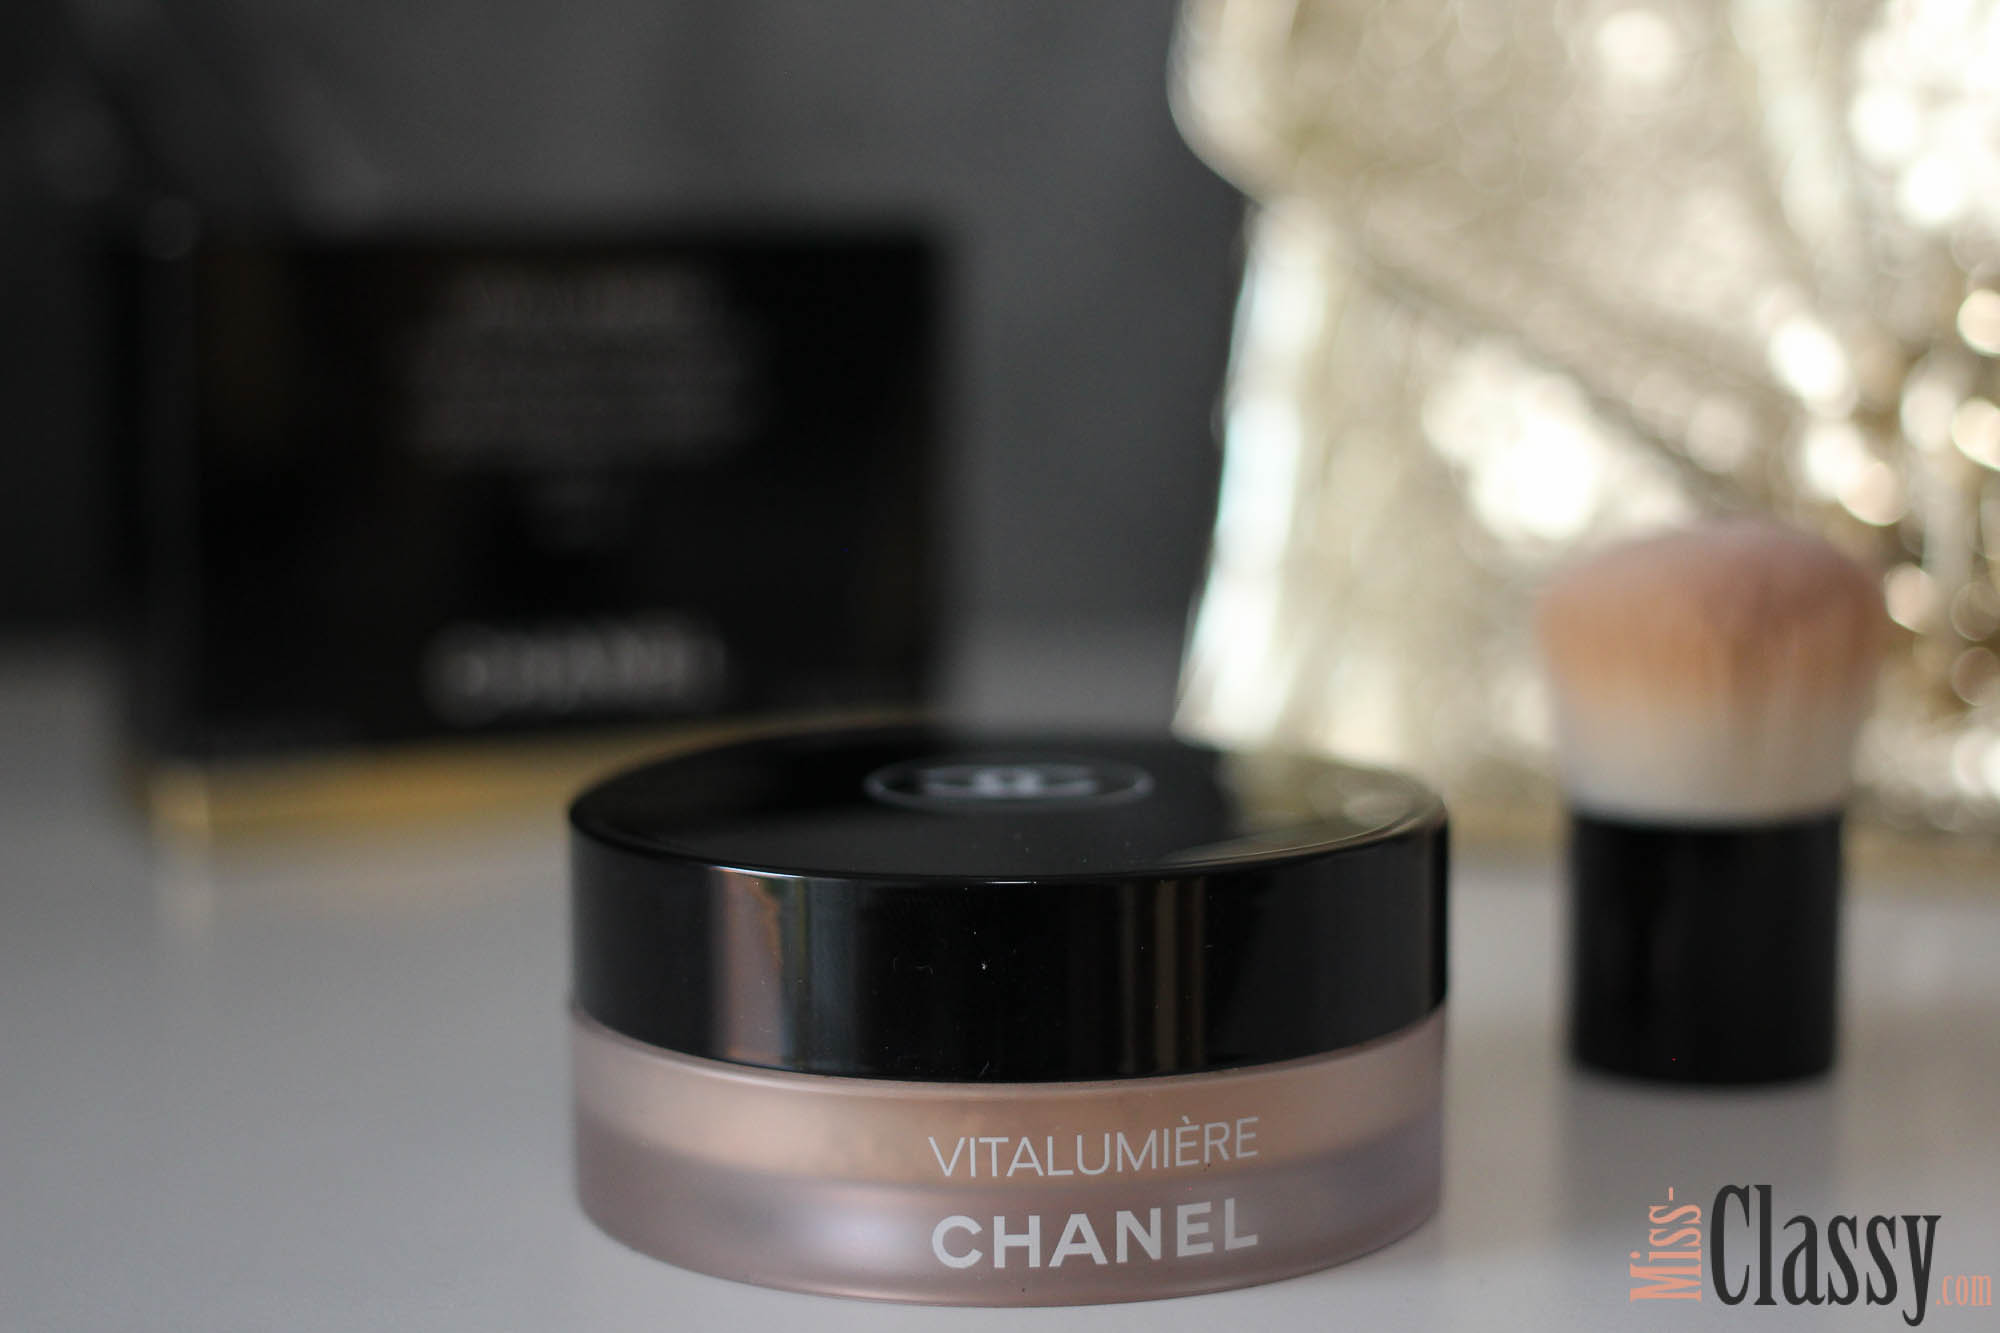 CHANEL - Vitalumiere Loose Powder - Beauty - Cosmetics, Chanel Vitalumiere Loose Powder Erfahrung, Erfahrungsbericht